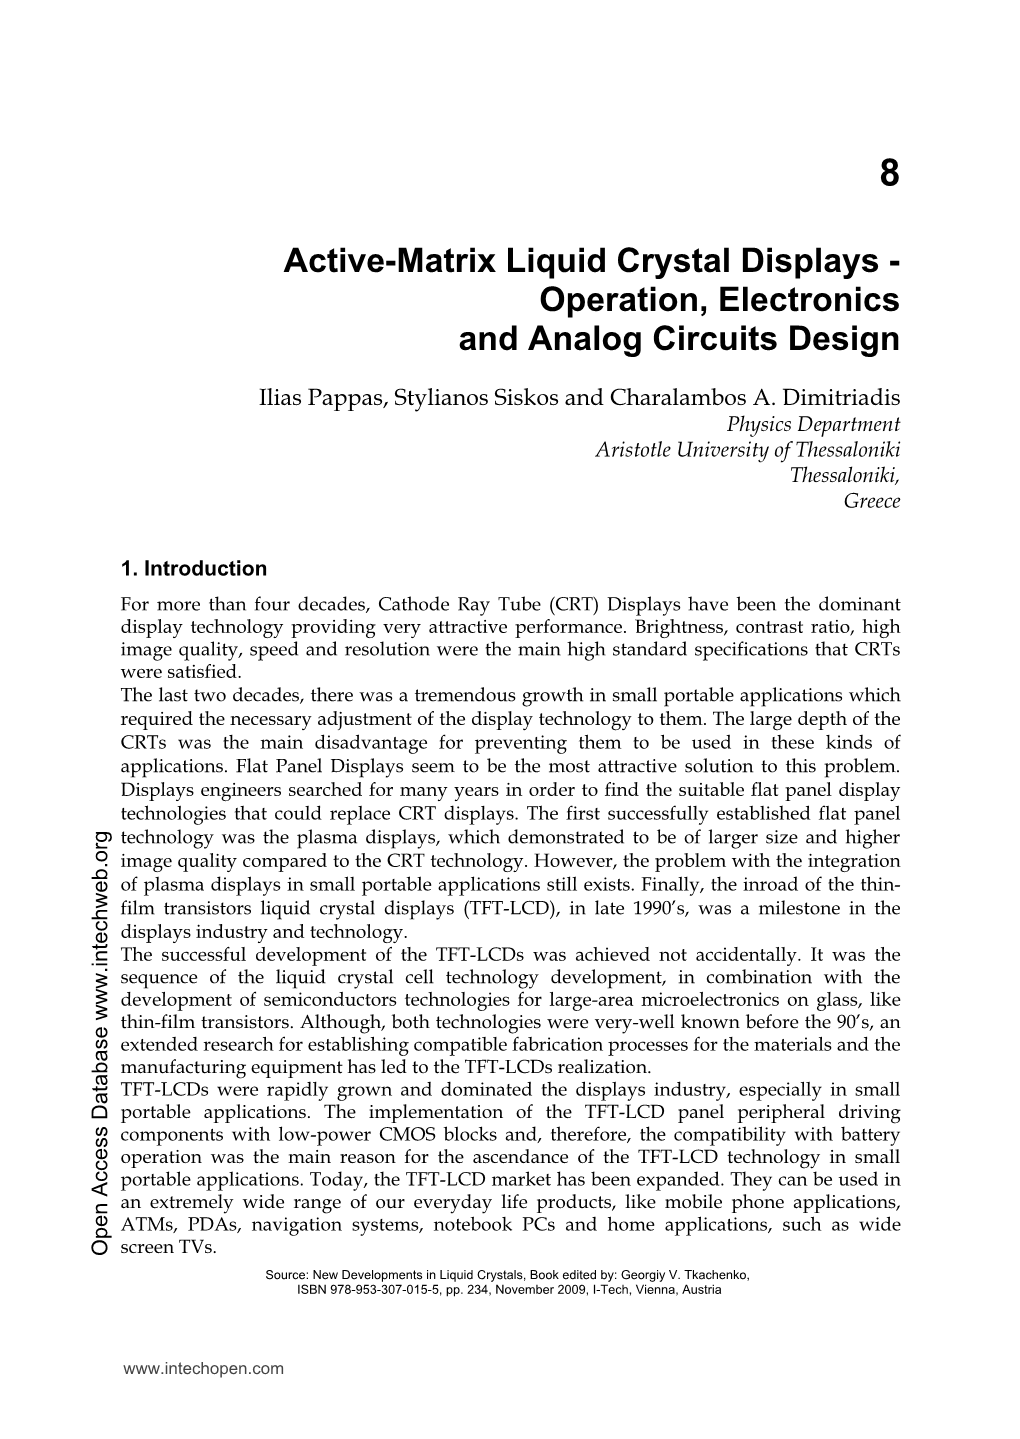 Active-Matrix Liquid Crystal Displays - Operation, Electronics and Analog Circuits Design